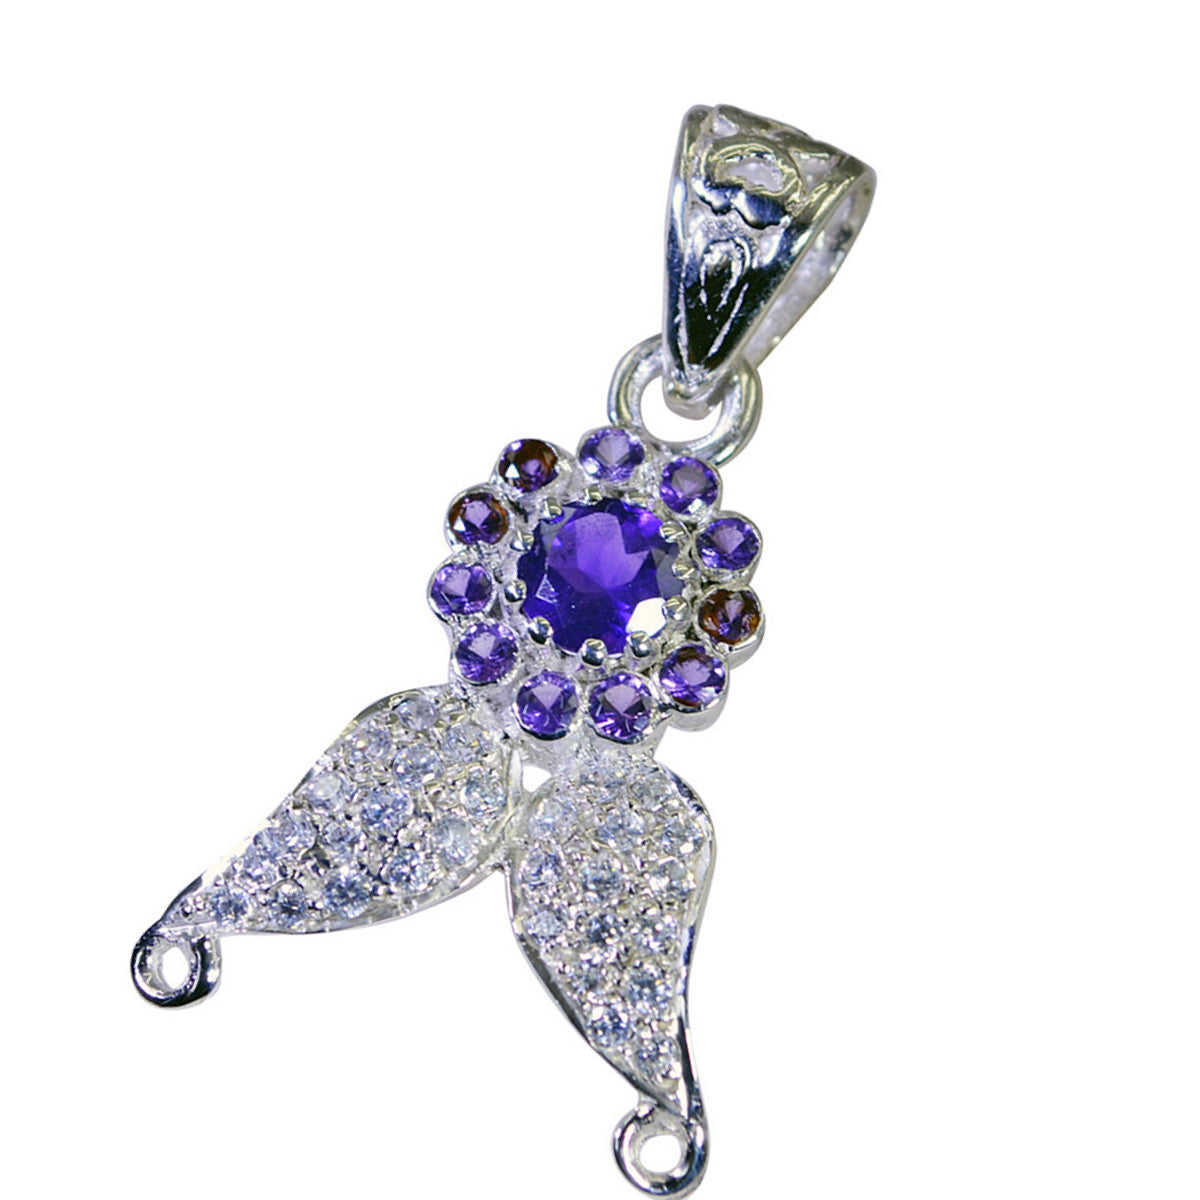 Riyo hermosa piedra preciosa redonda facetada amatista púrpura colgante de plata de ley 1124 regalo para novia